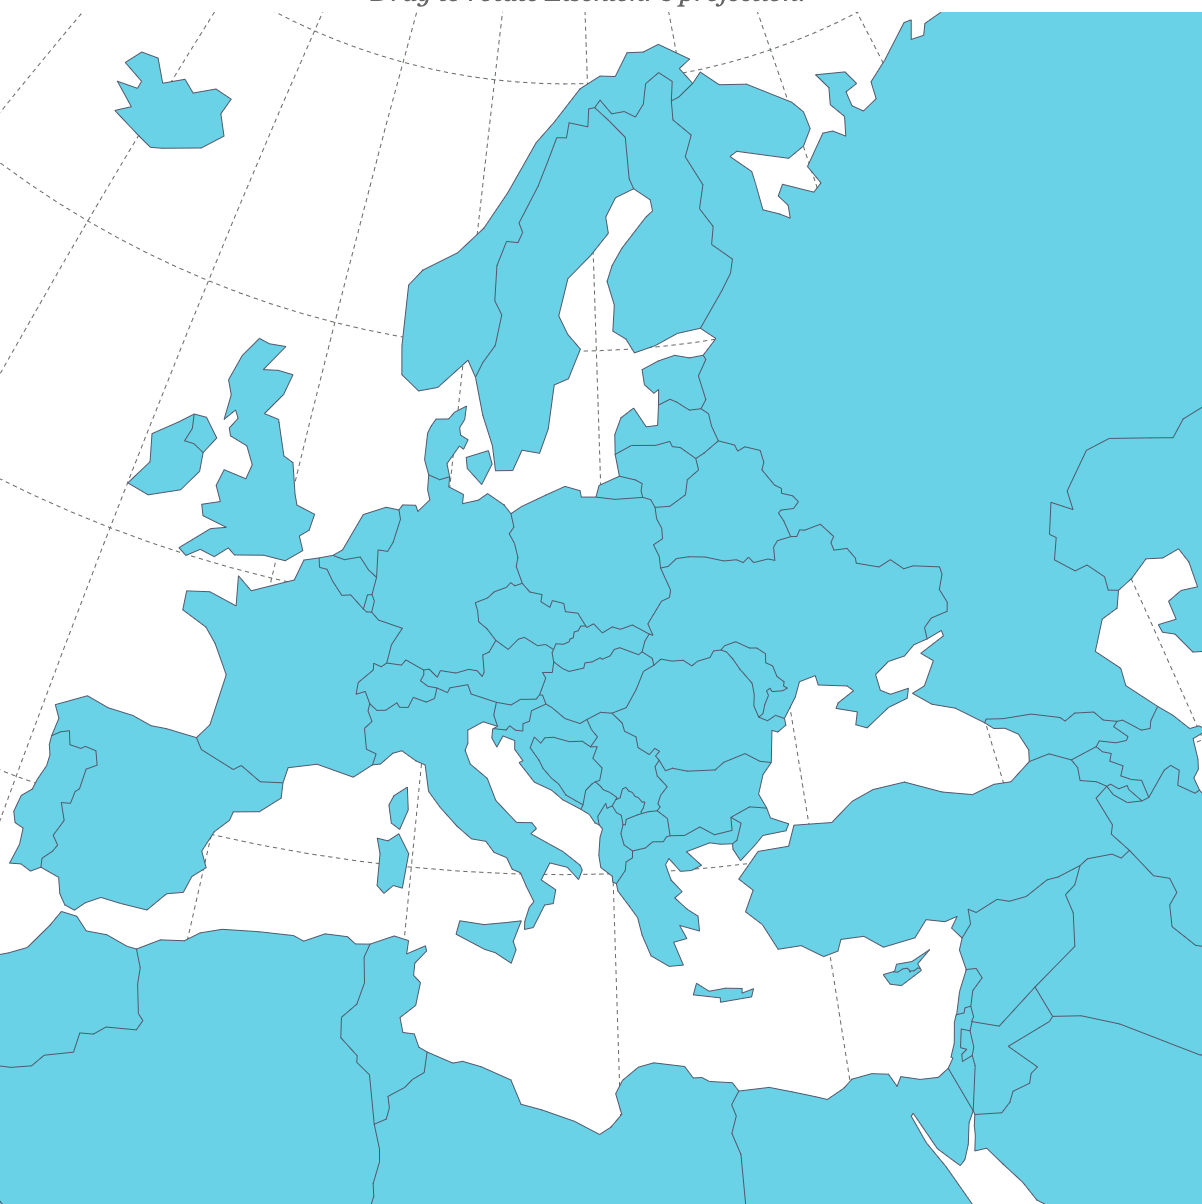 Europe (40+ areas)